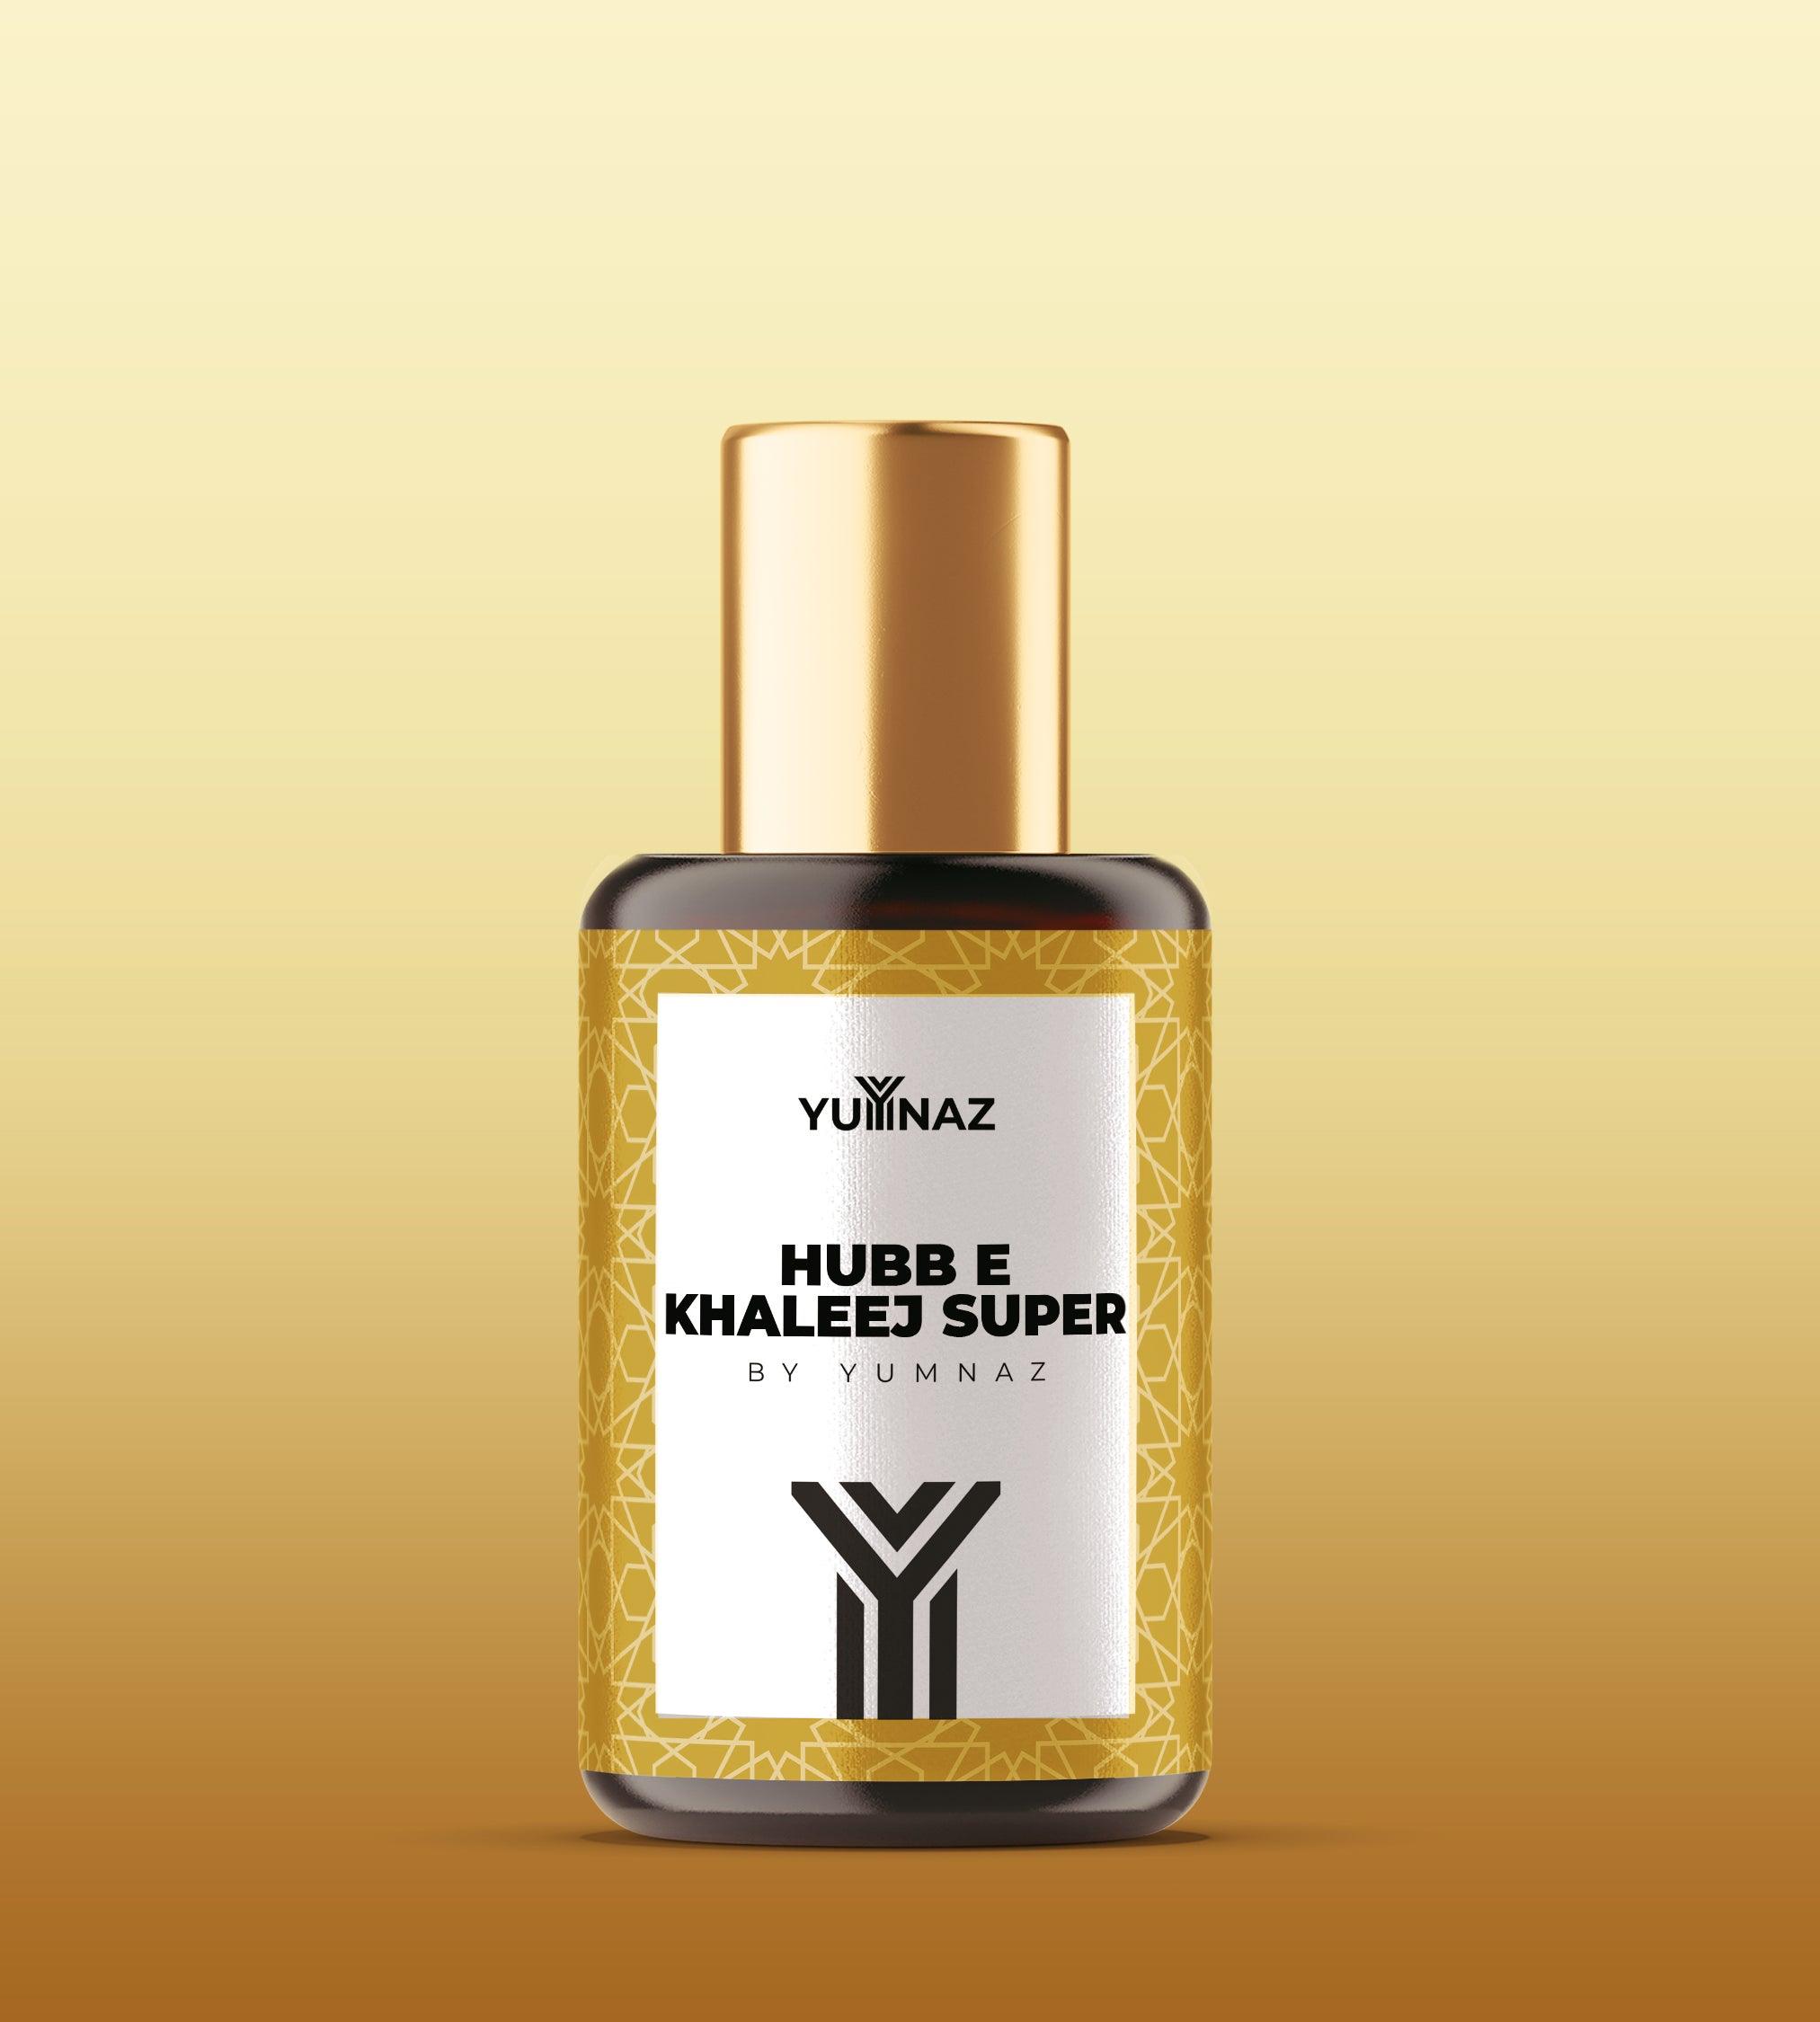 Discover the Enchanting Fragrance of Yumnaz HUBB E KHALEEJ SUPER - Perfume Price in Pakistan